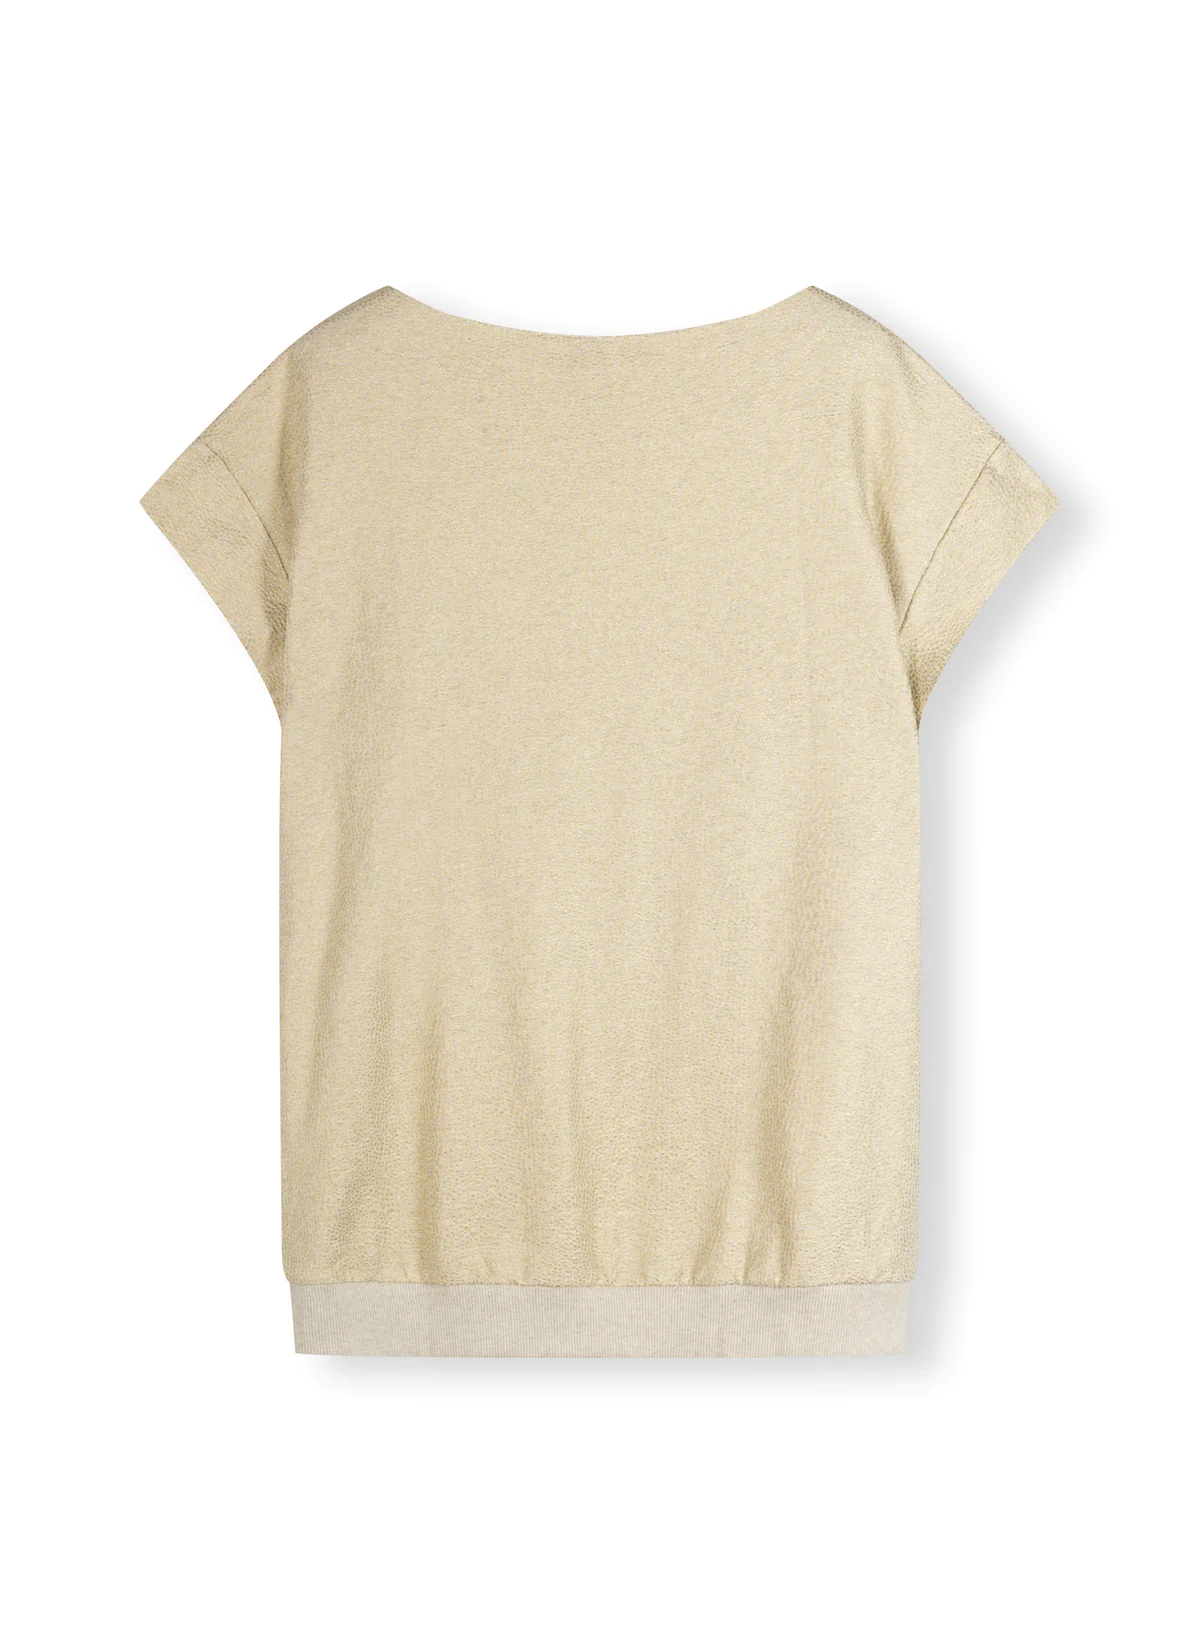 10Days short sleeve sweater foil light safari